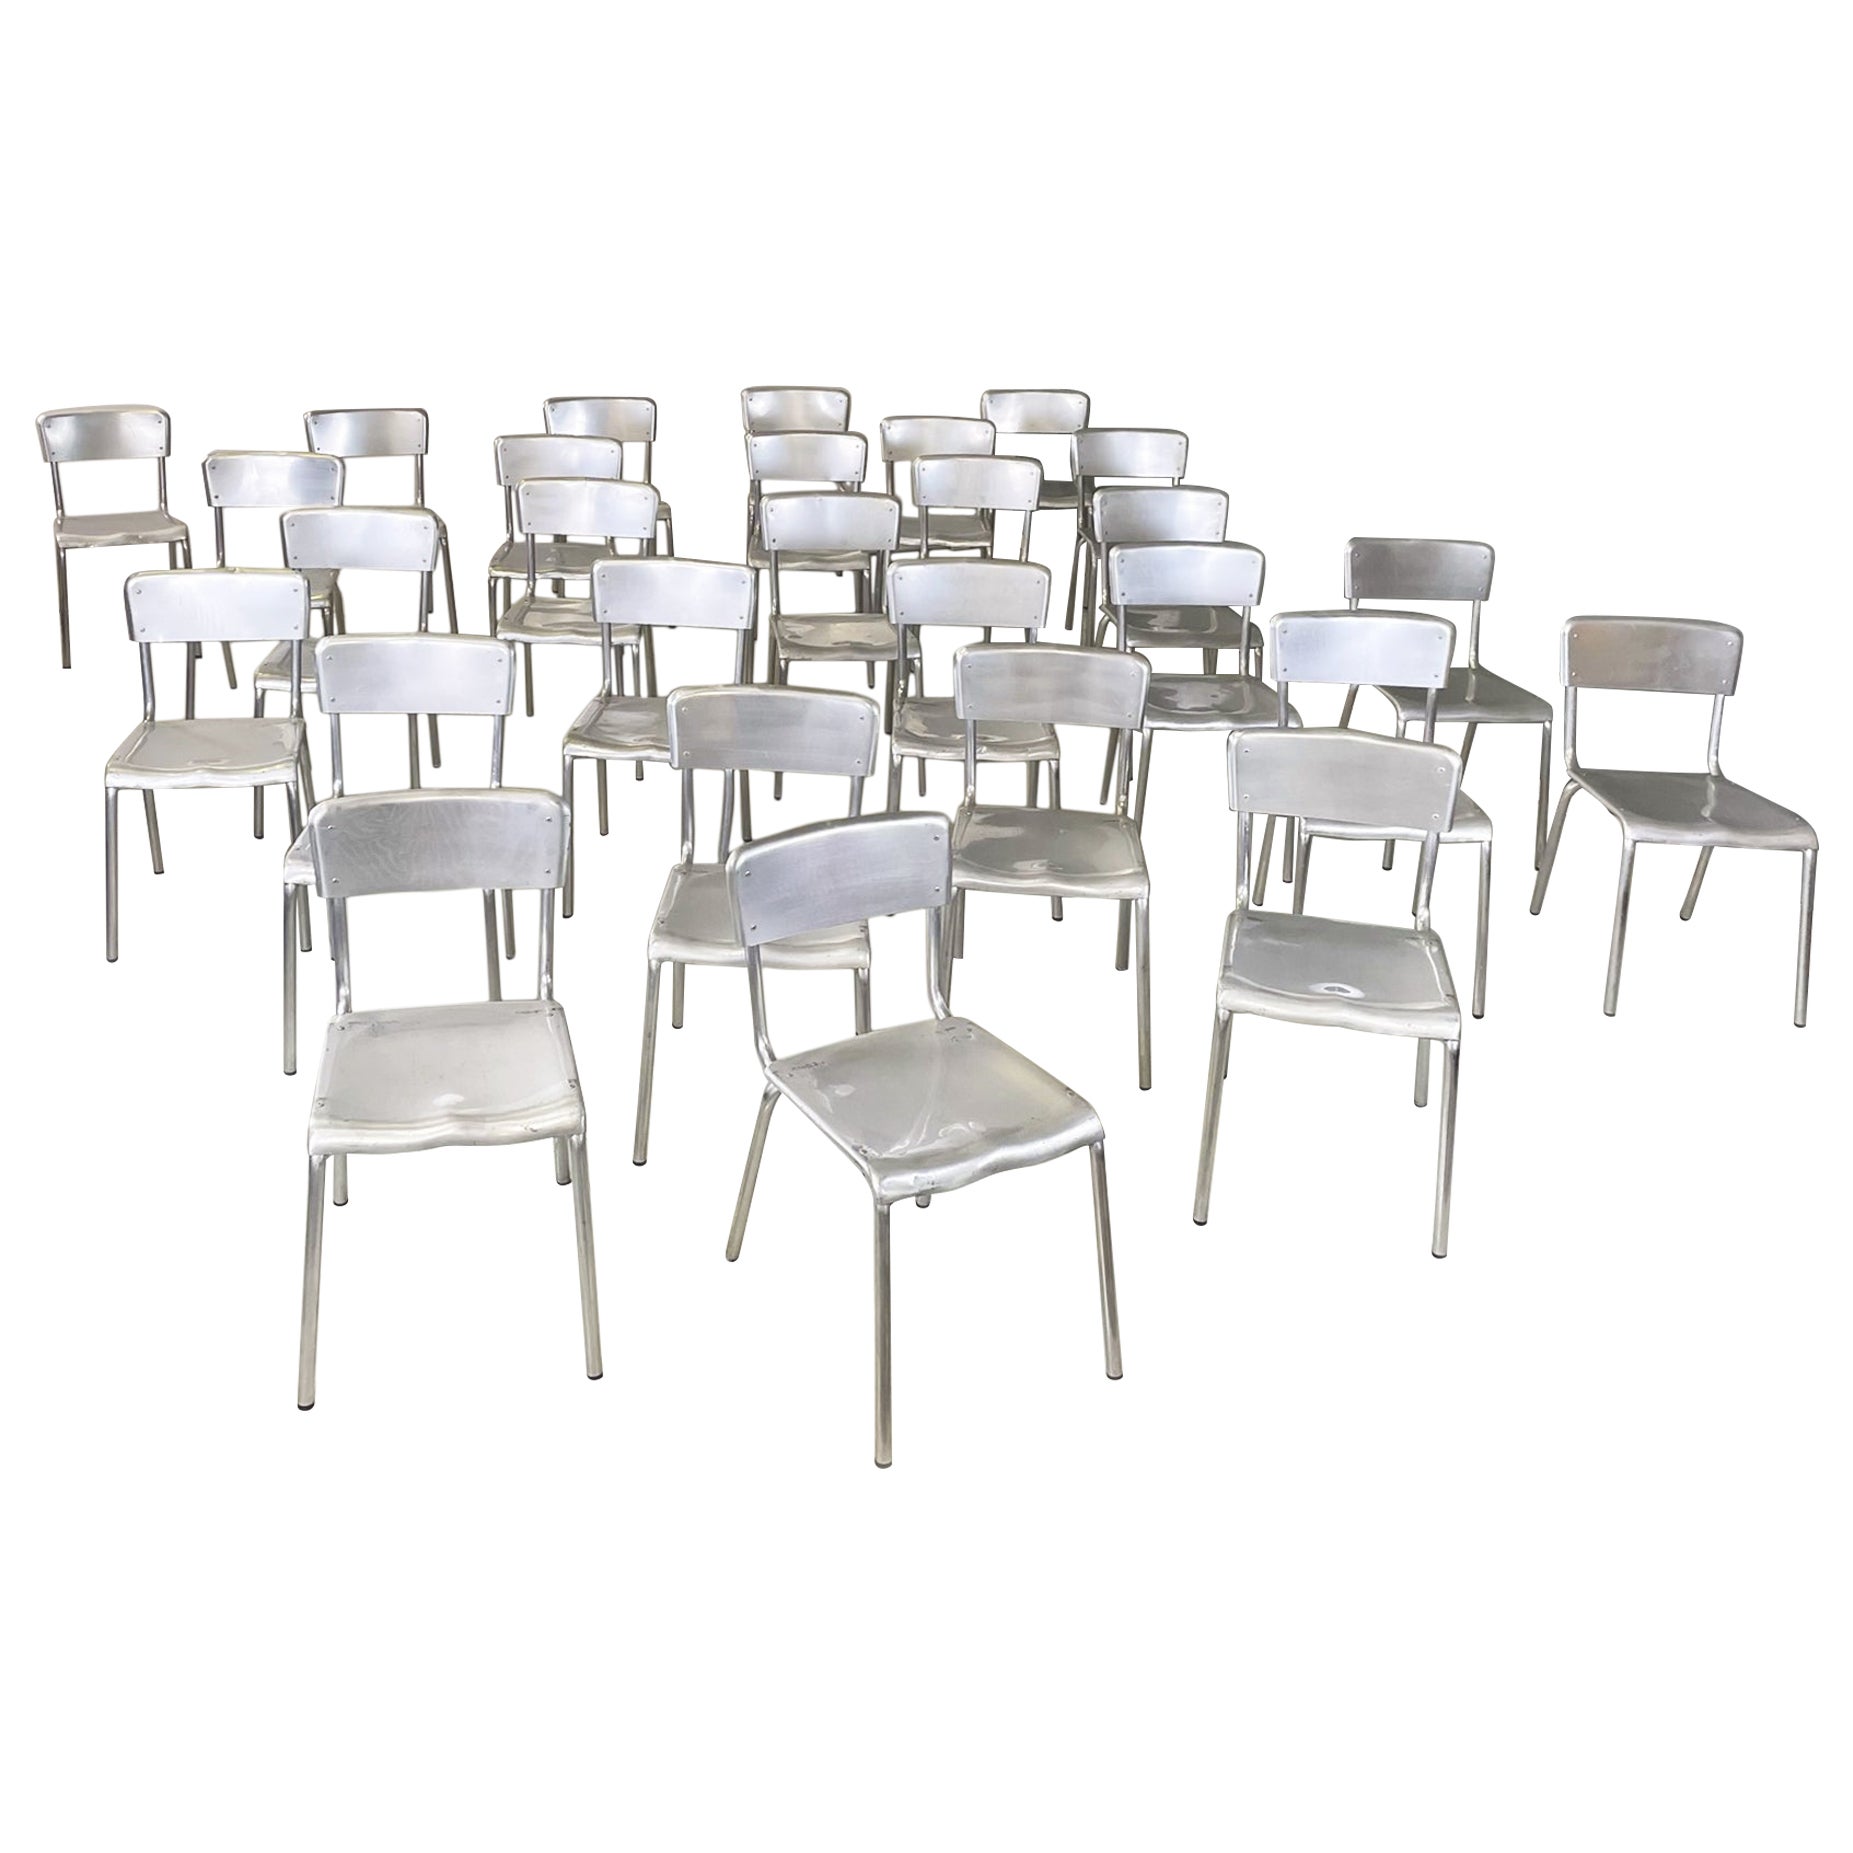 Italian modern rectangular aluminium stackable chairs, 1980s